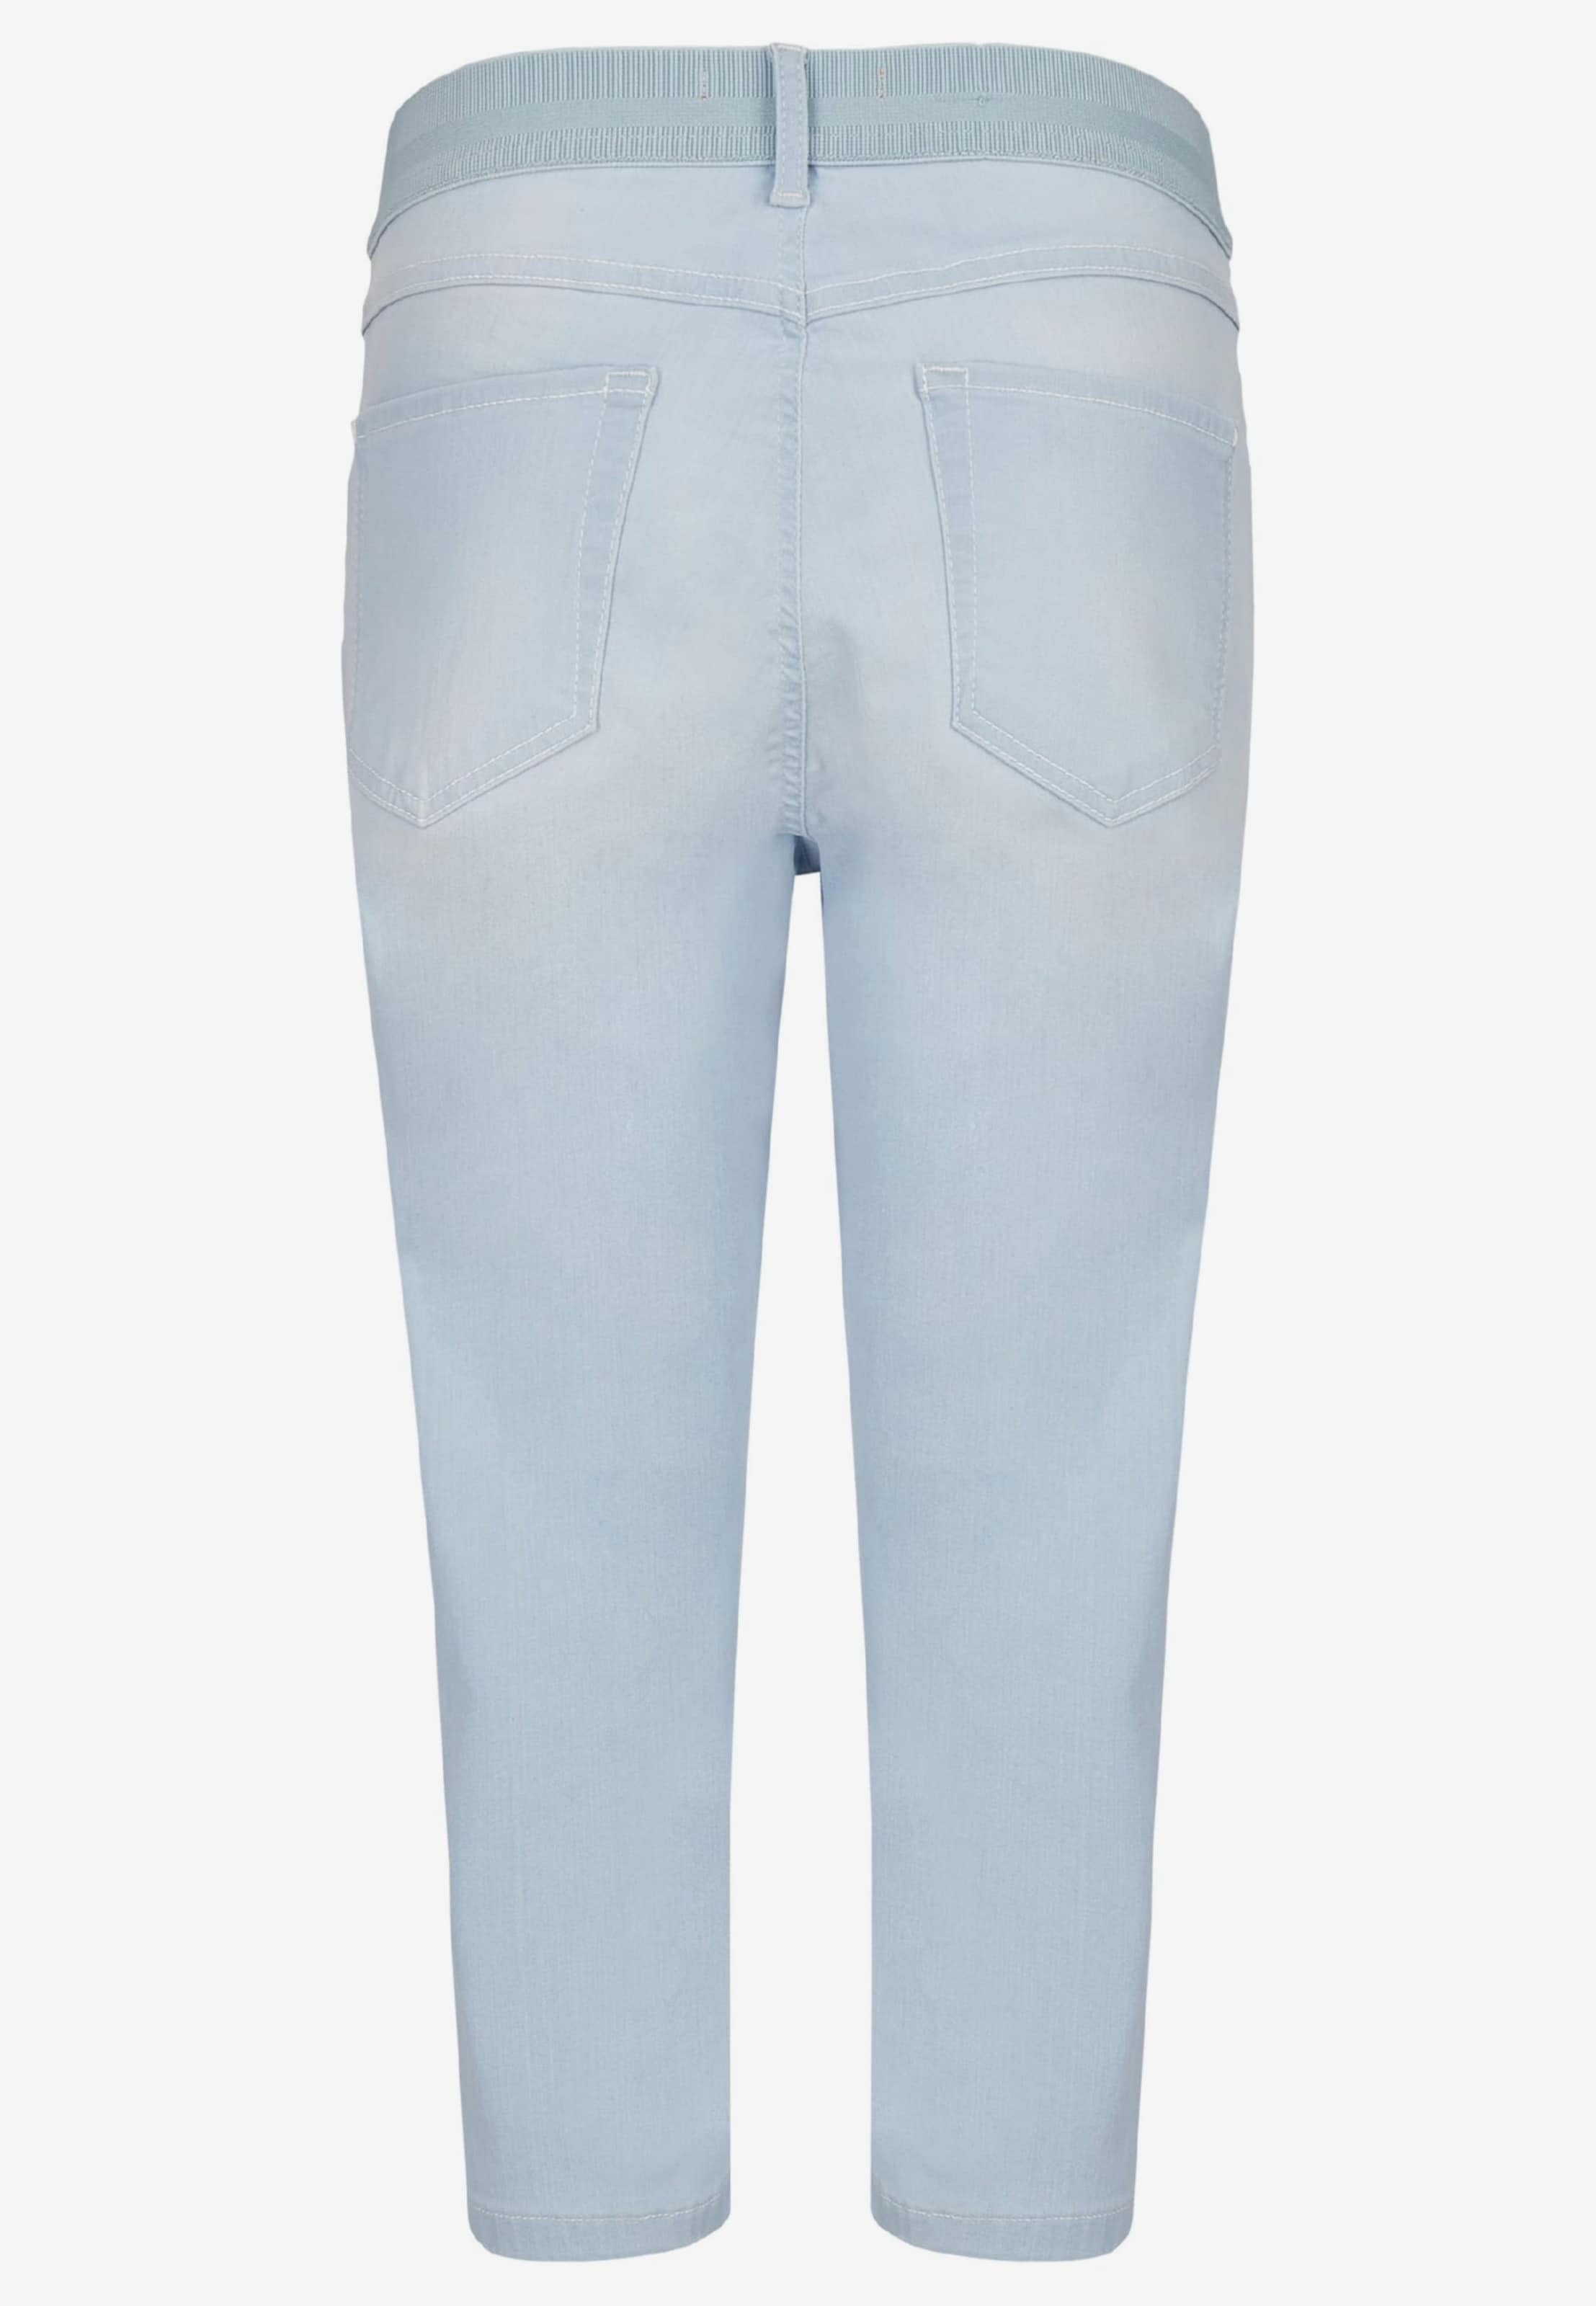 Slimfit in Jeans Jeans YOU | Onesize Capri Blau Kurze Dehnbund ABOUT Angels